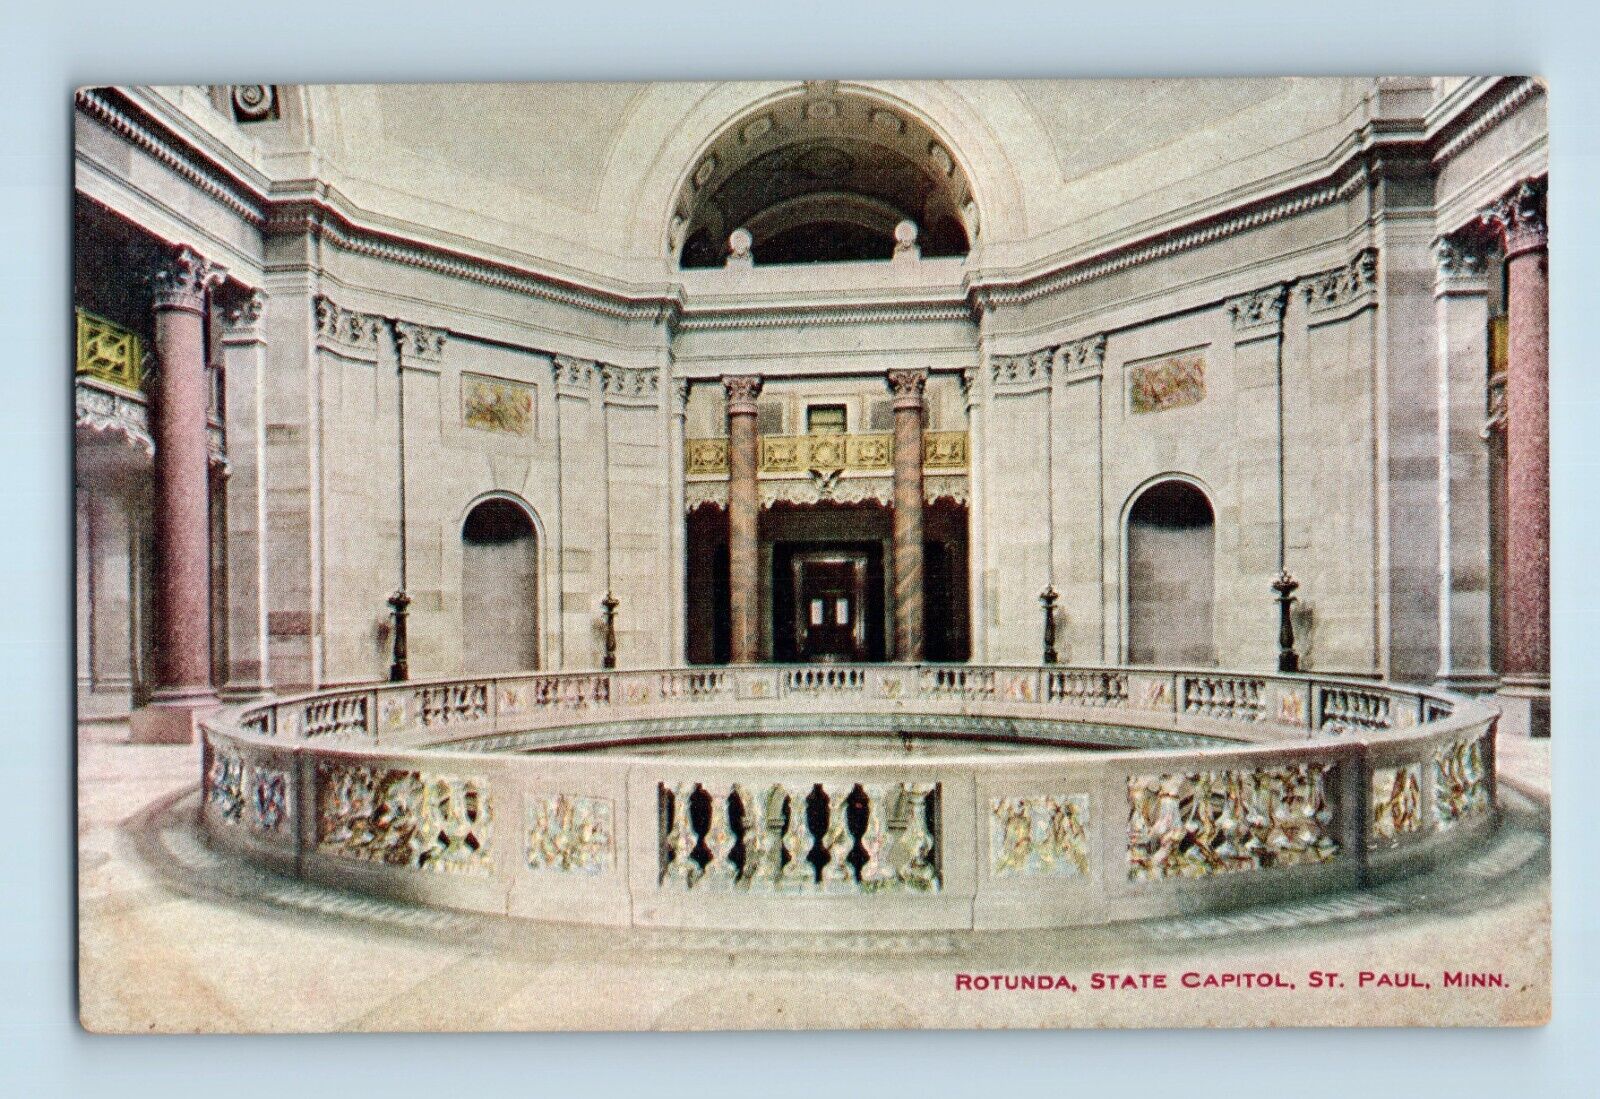 Rotunda State Capitol Marble Columns Archways Saint Paul Minnesota Postcard B7